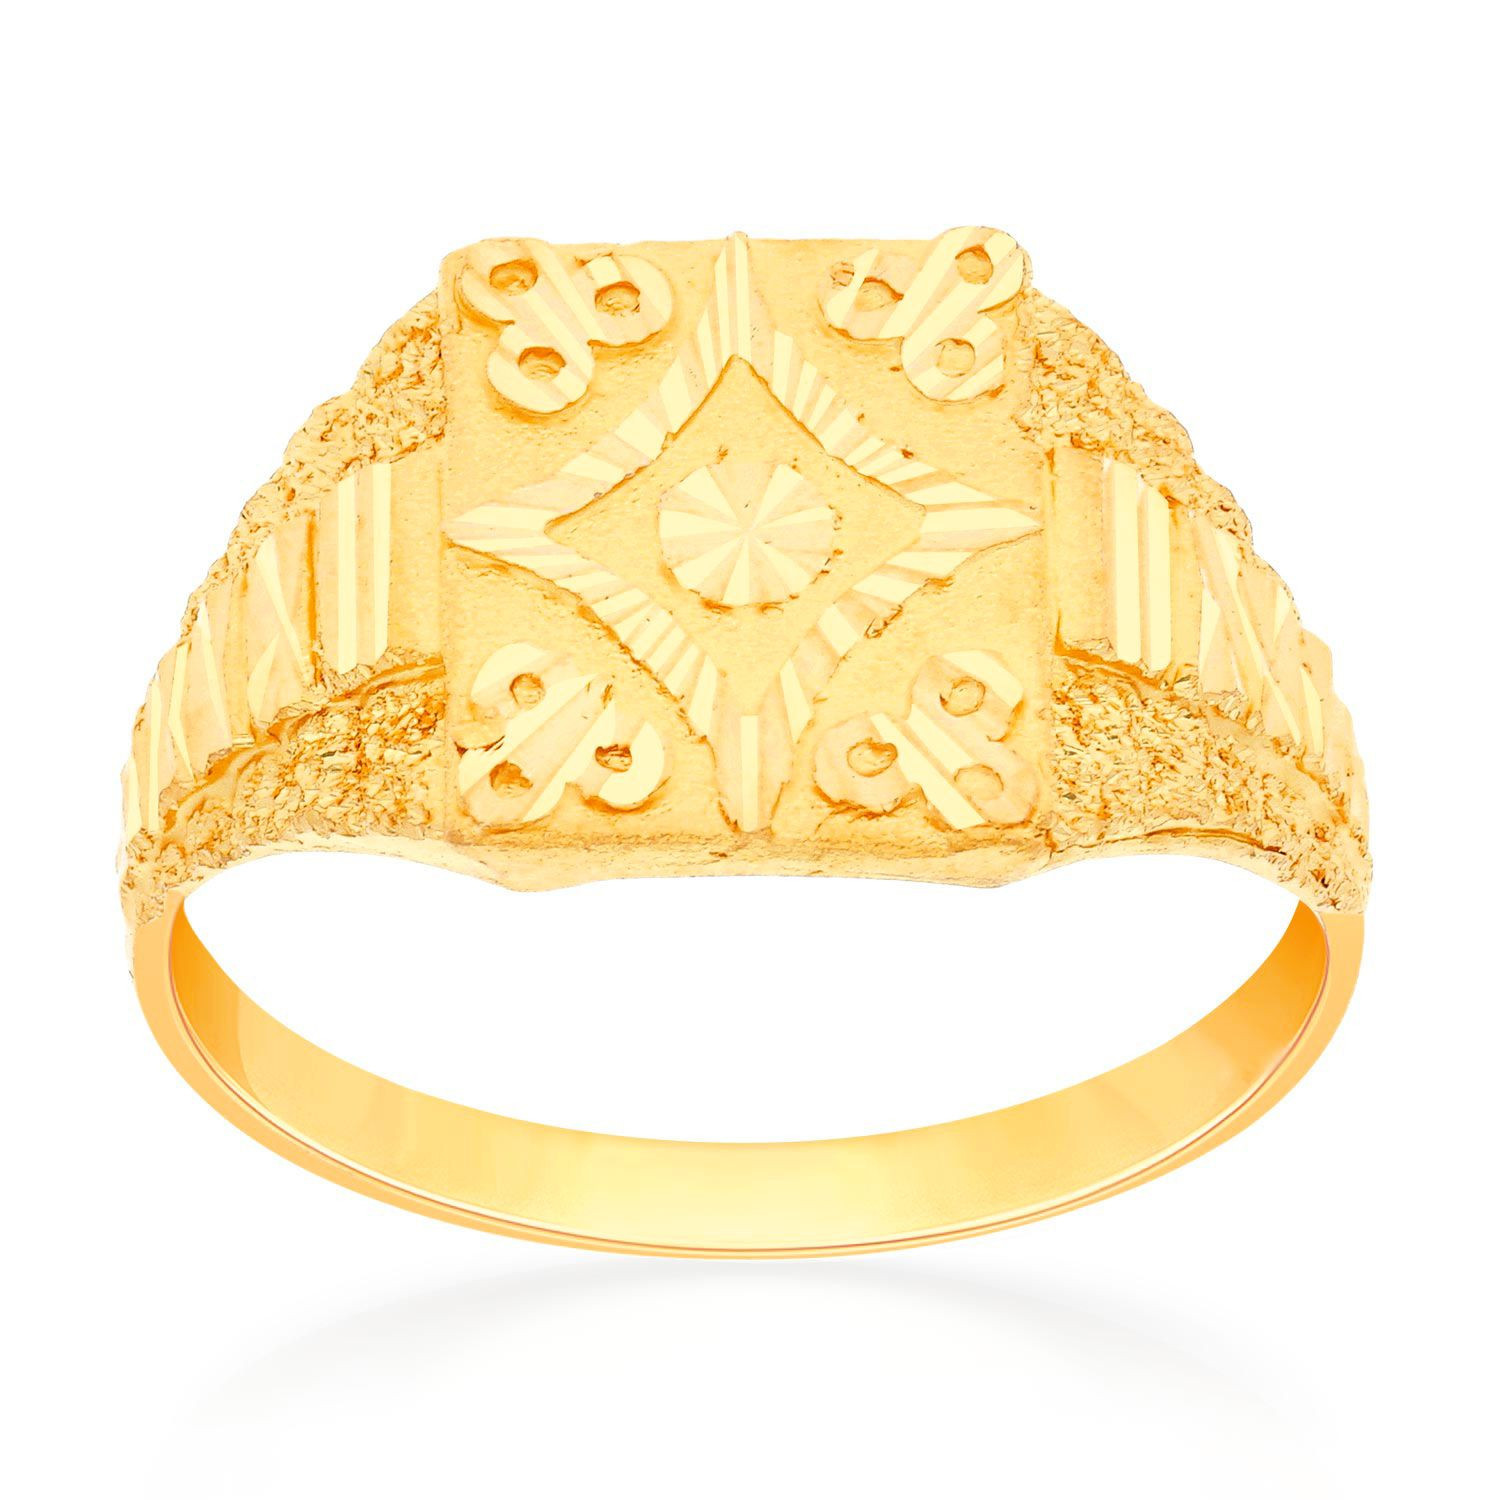 Buy Malabar Gold Ring RG098528 for Men Online | Malabar Gold & Diamonds